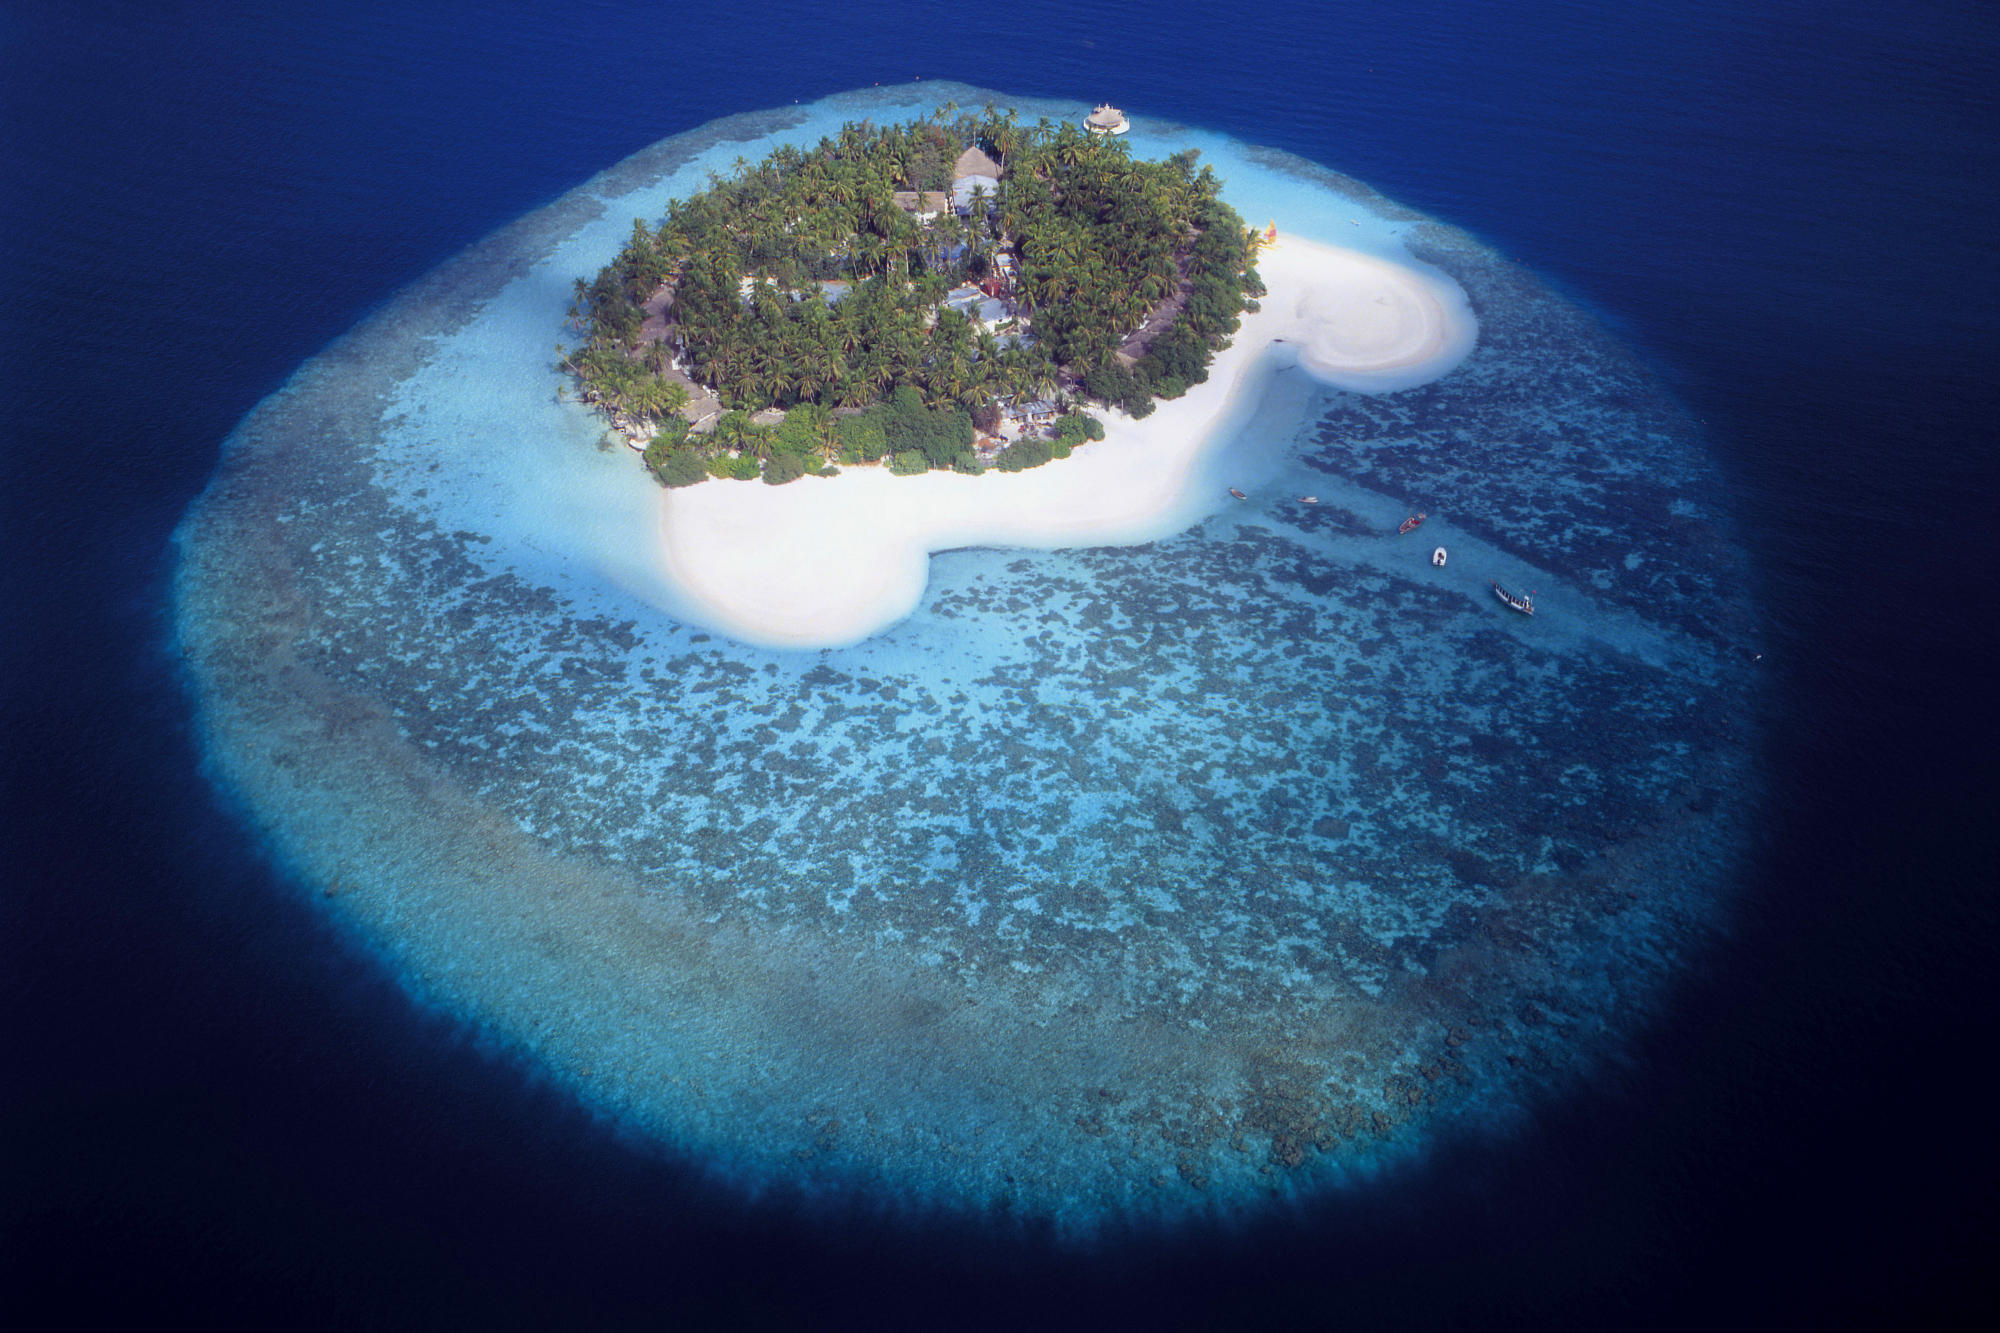 The island was beautiful. Атолл коралловый остров. Остров риф (Reef Island). Лагуна Атолл риф. Мальдивы коралловые острова.